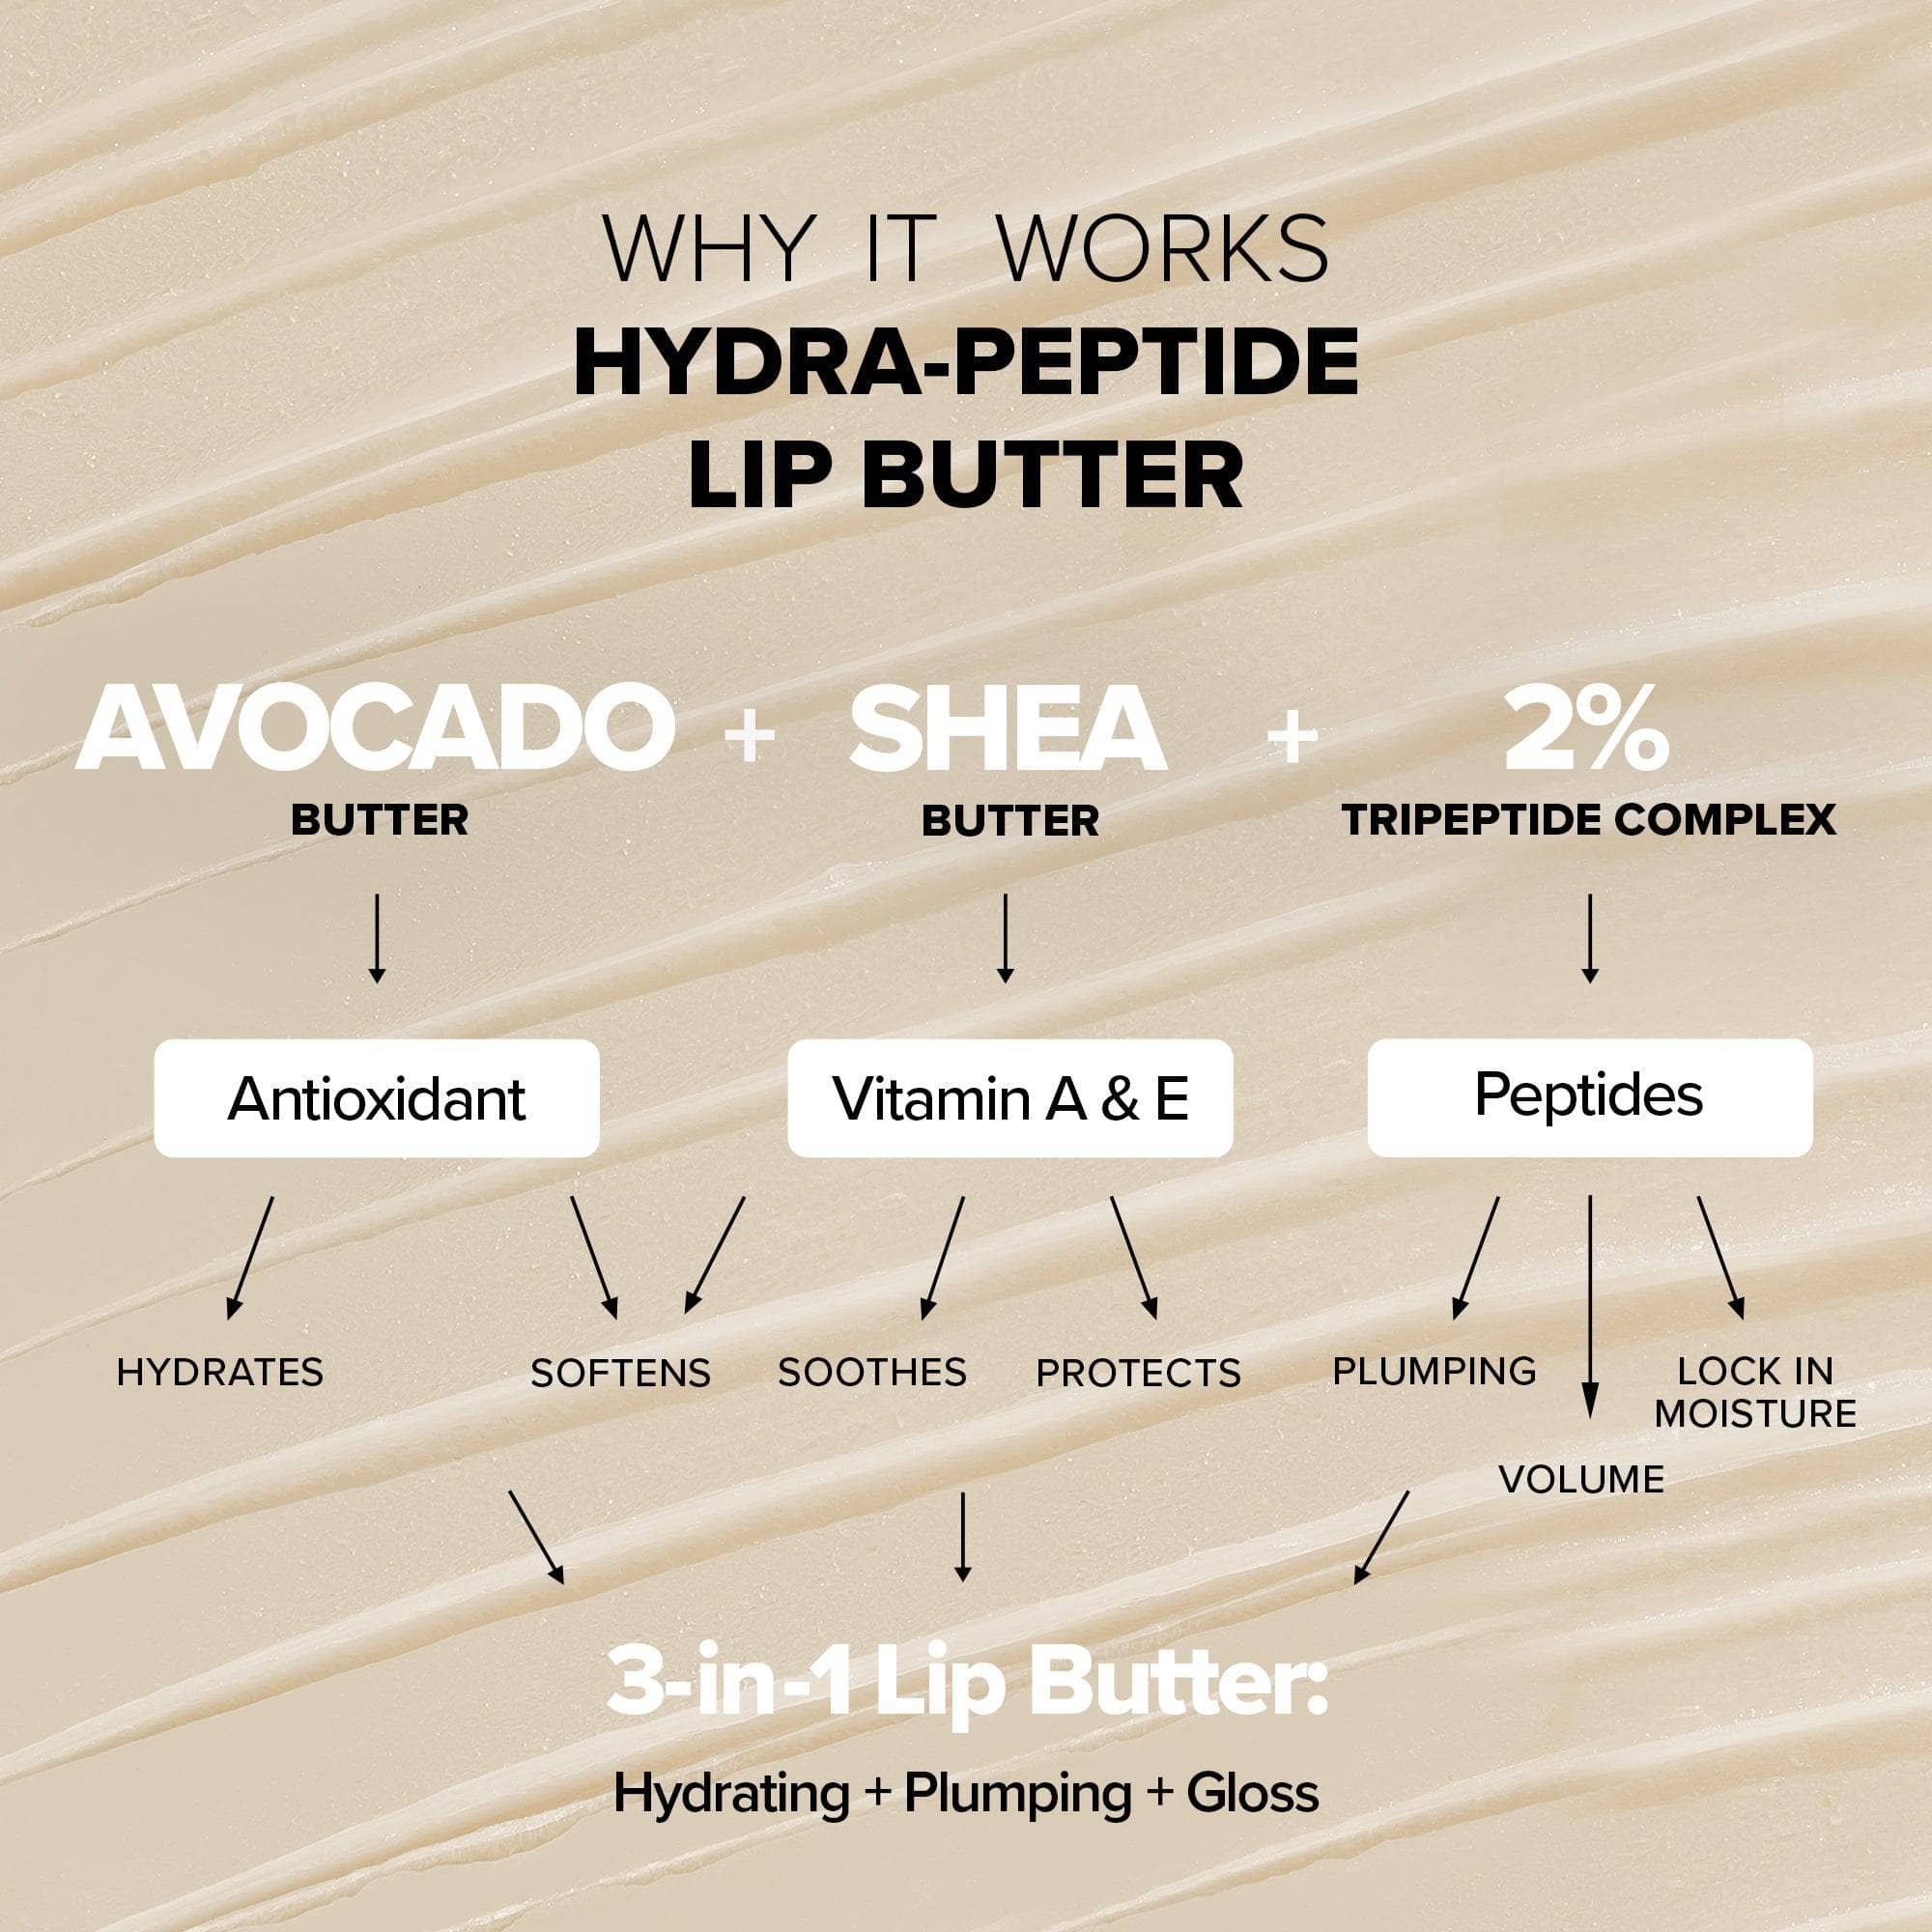 Hydra-Peptide Lip Butter Sugar Plum. Why it works description